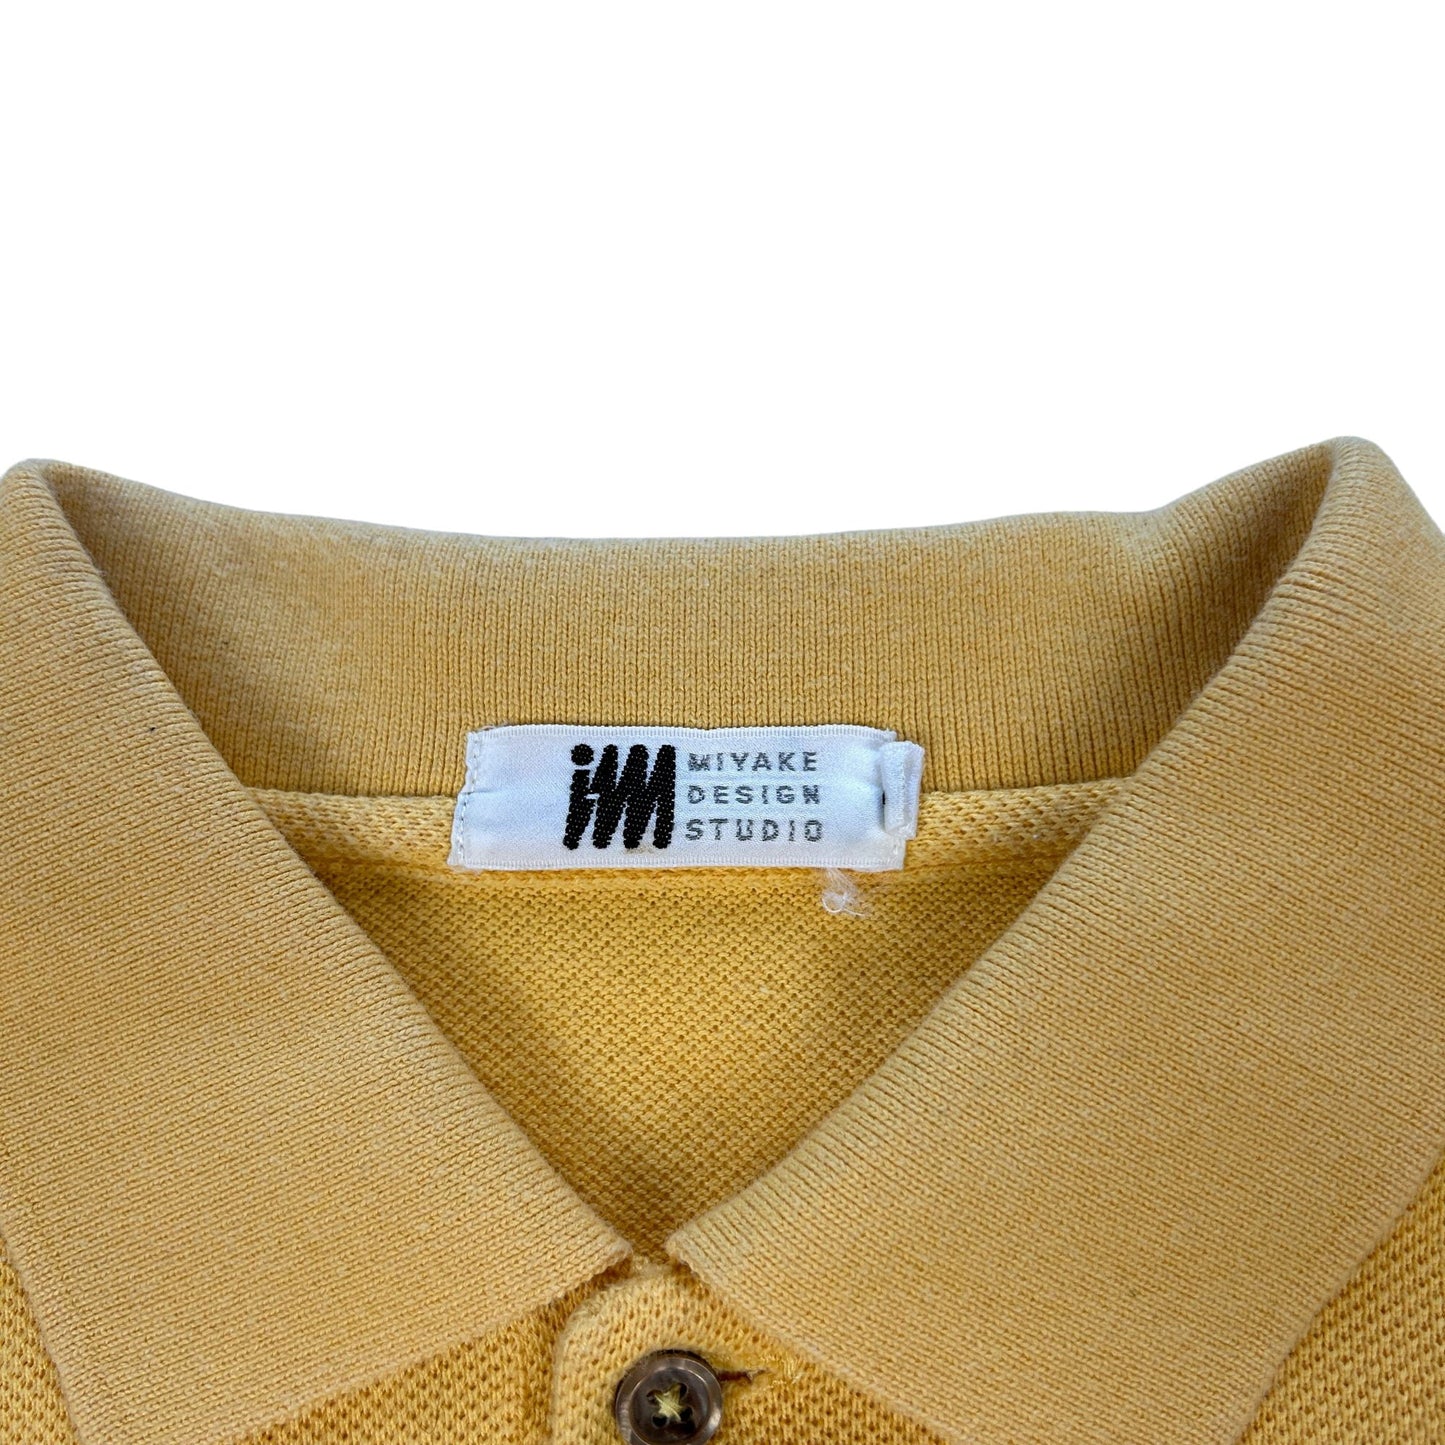 Vintage Issey Miyake Design Studio Polo Shirt Size L